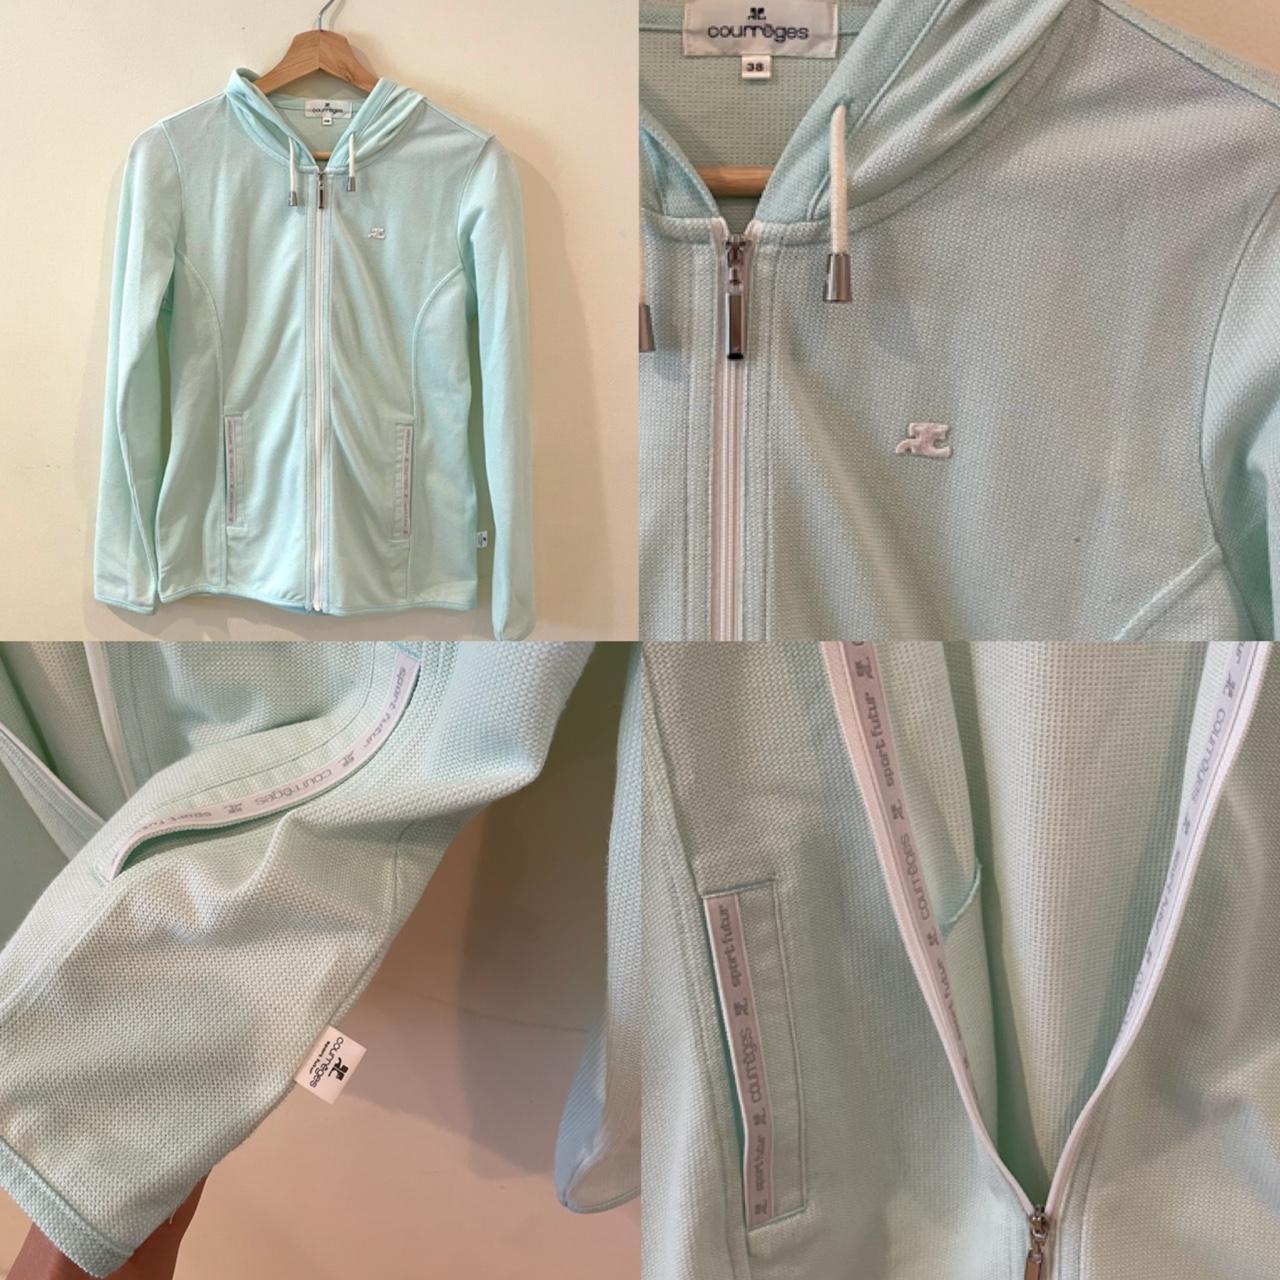 Product Image 4 - courreges sports zipper jacket 
•Condition: